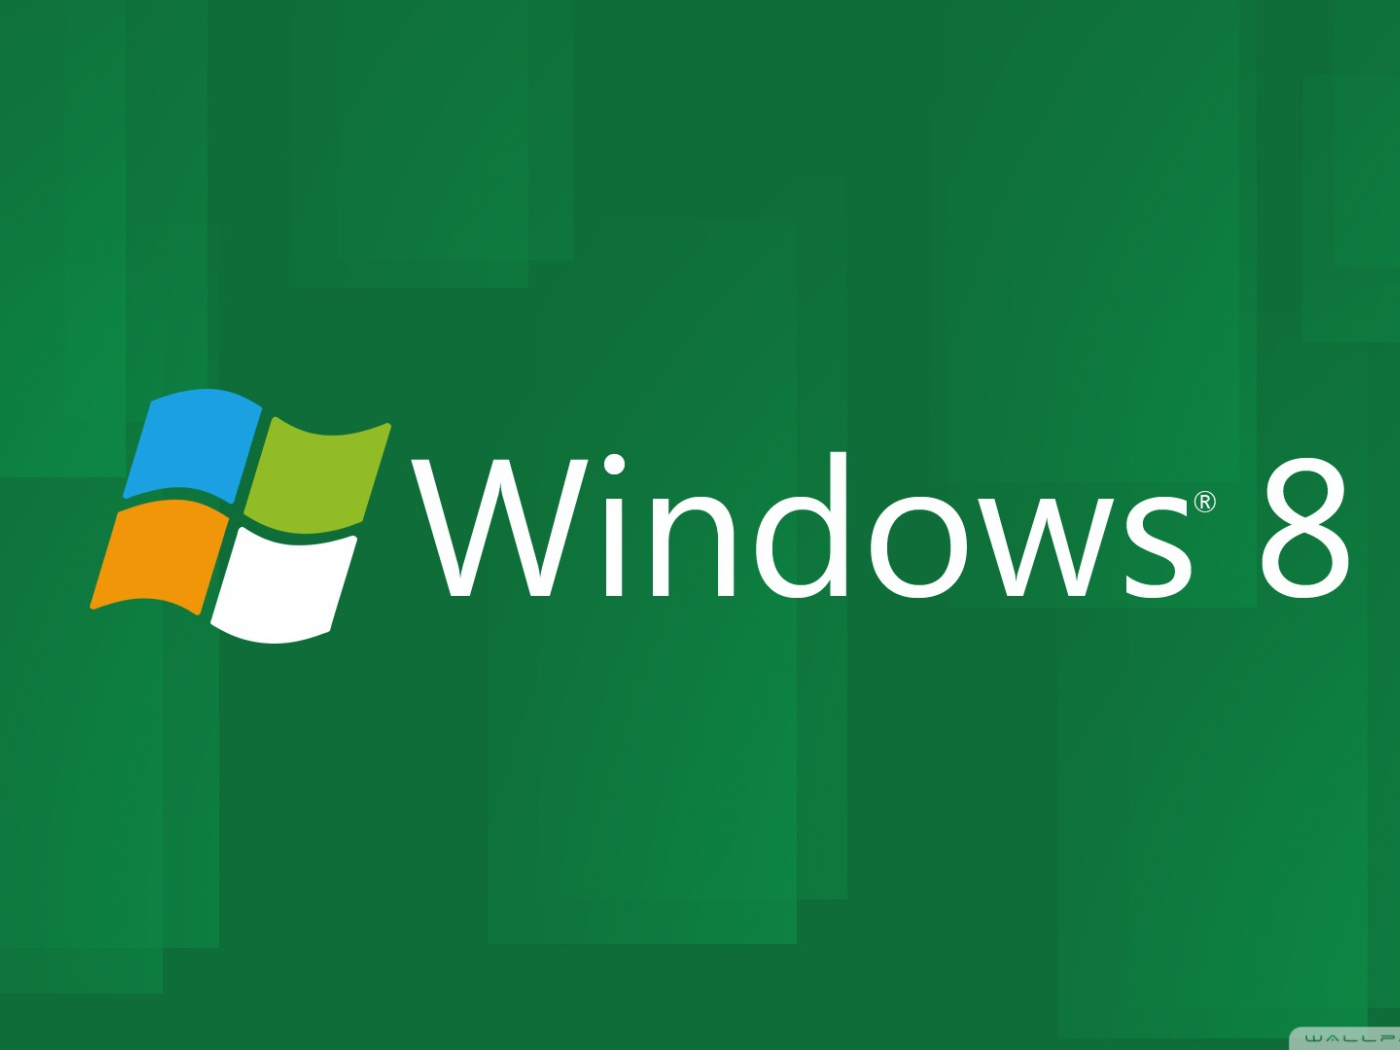 Windows 8 green theme